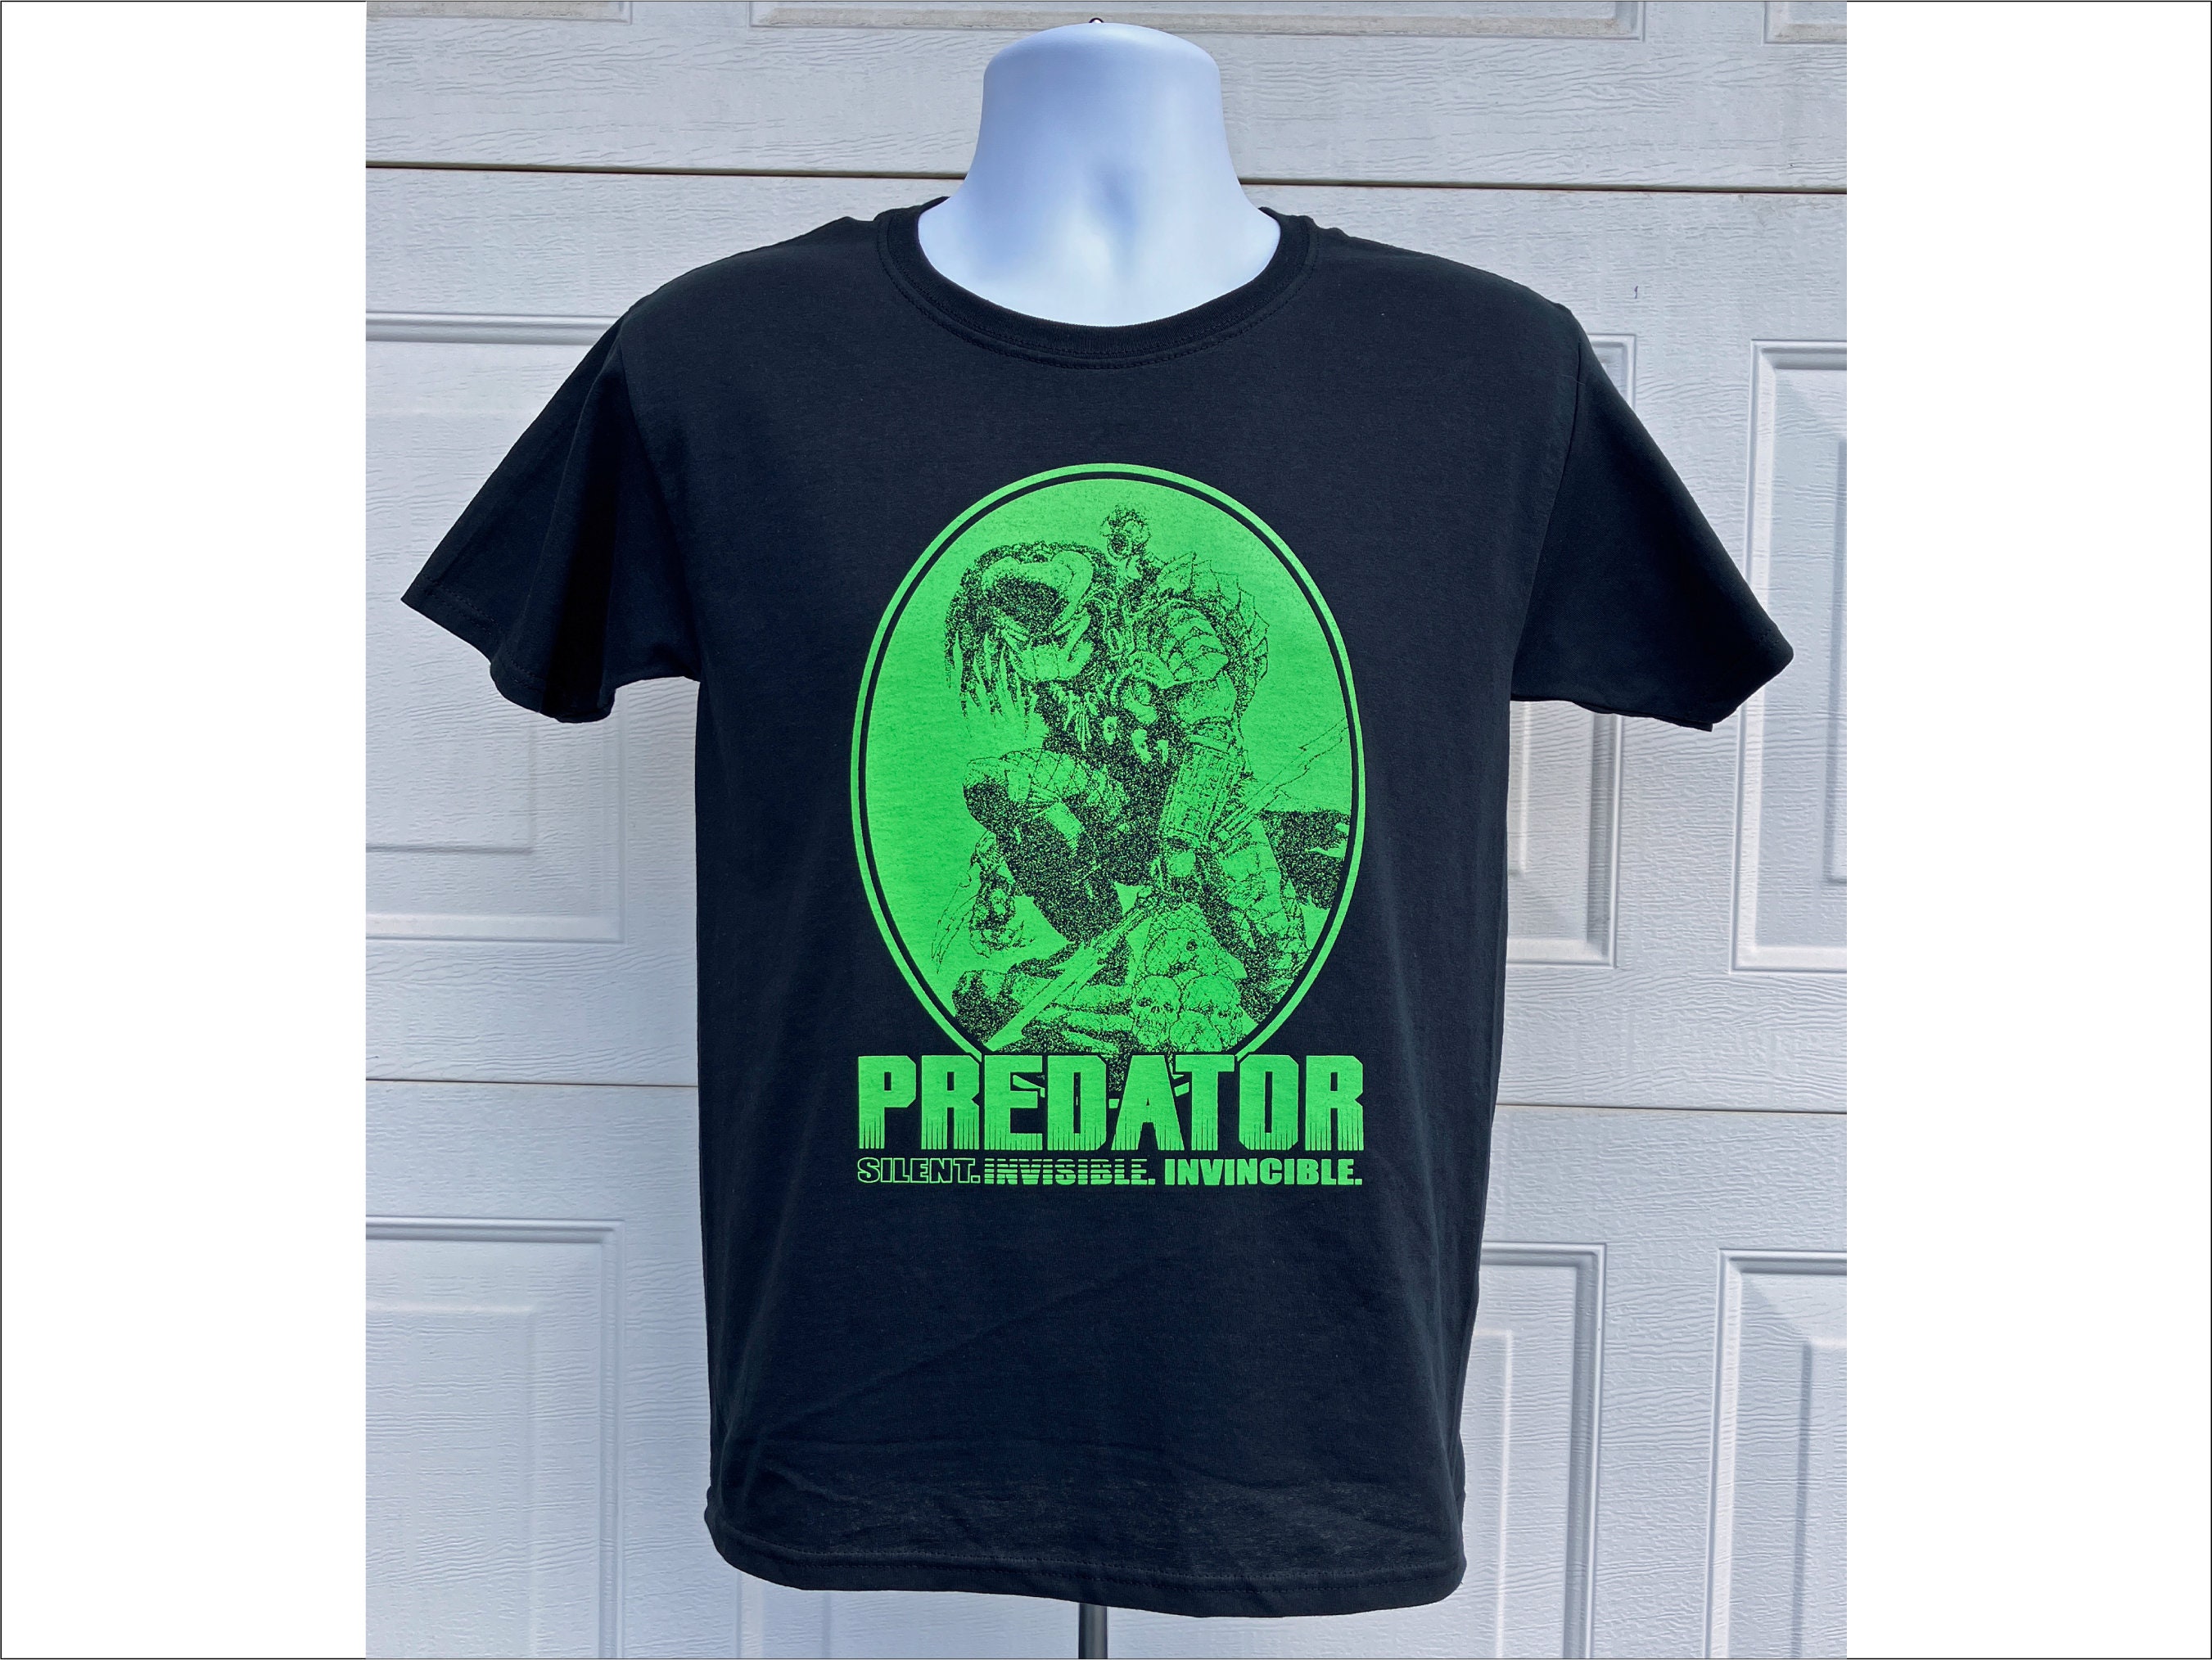 The PREDATOR Movie T-shirt Screen Printed All Sizes Yautja 